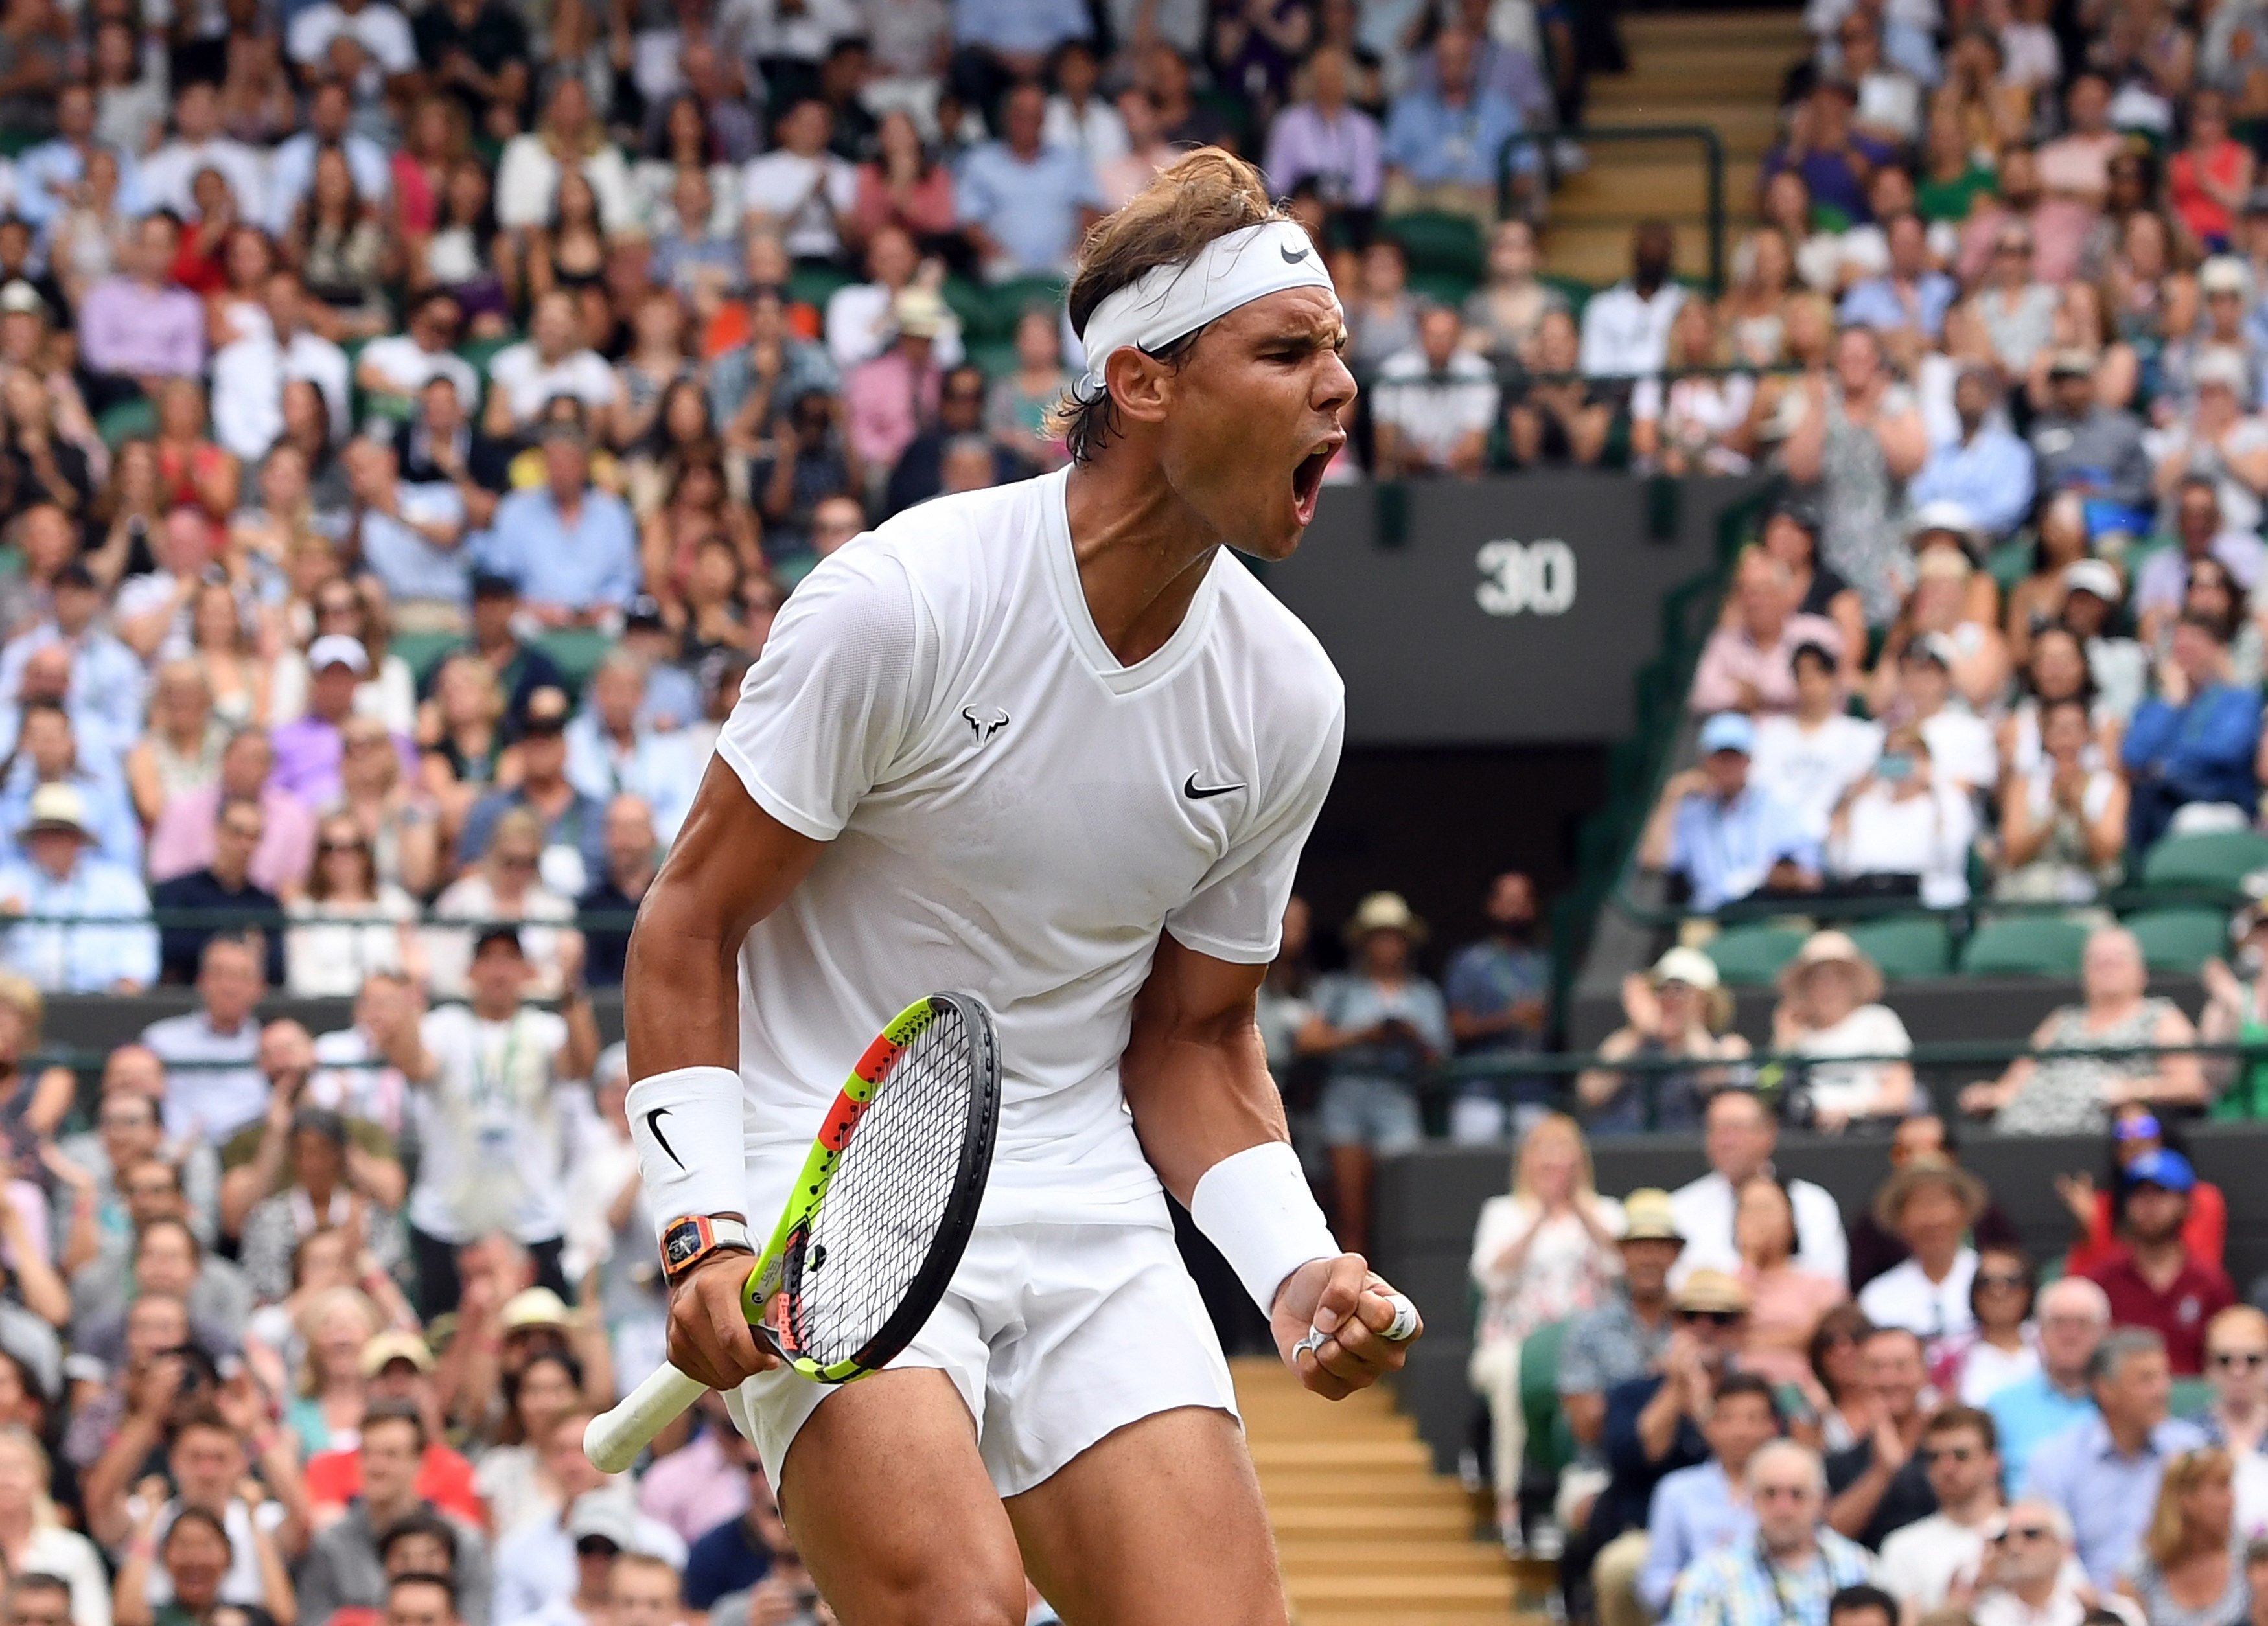 Nadal elimina a Querrey y se enfrentará a Federer en las semifinales de Wimbledon